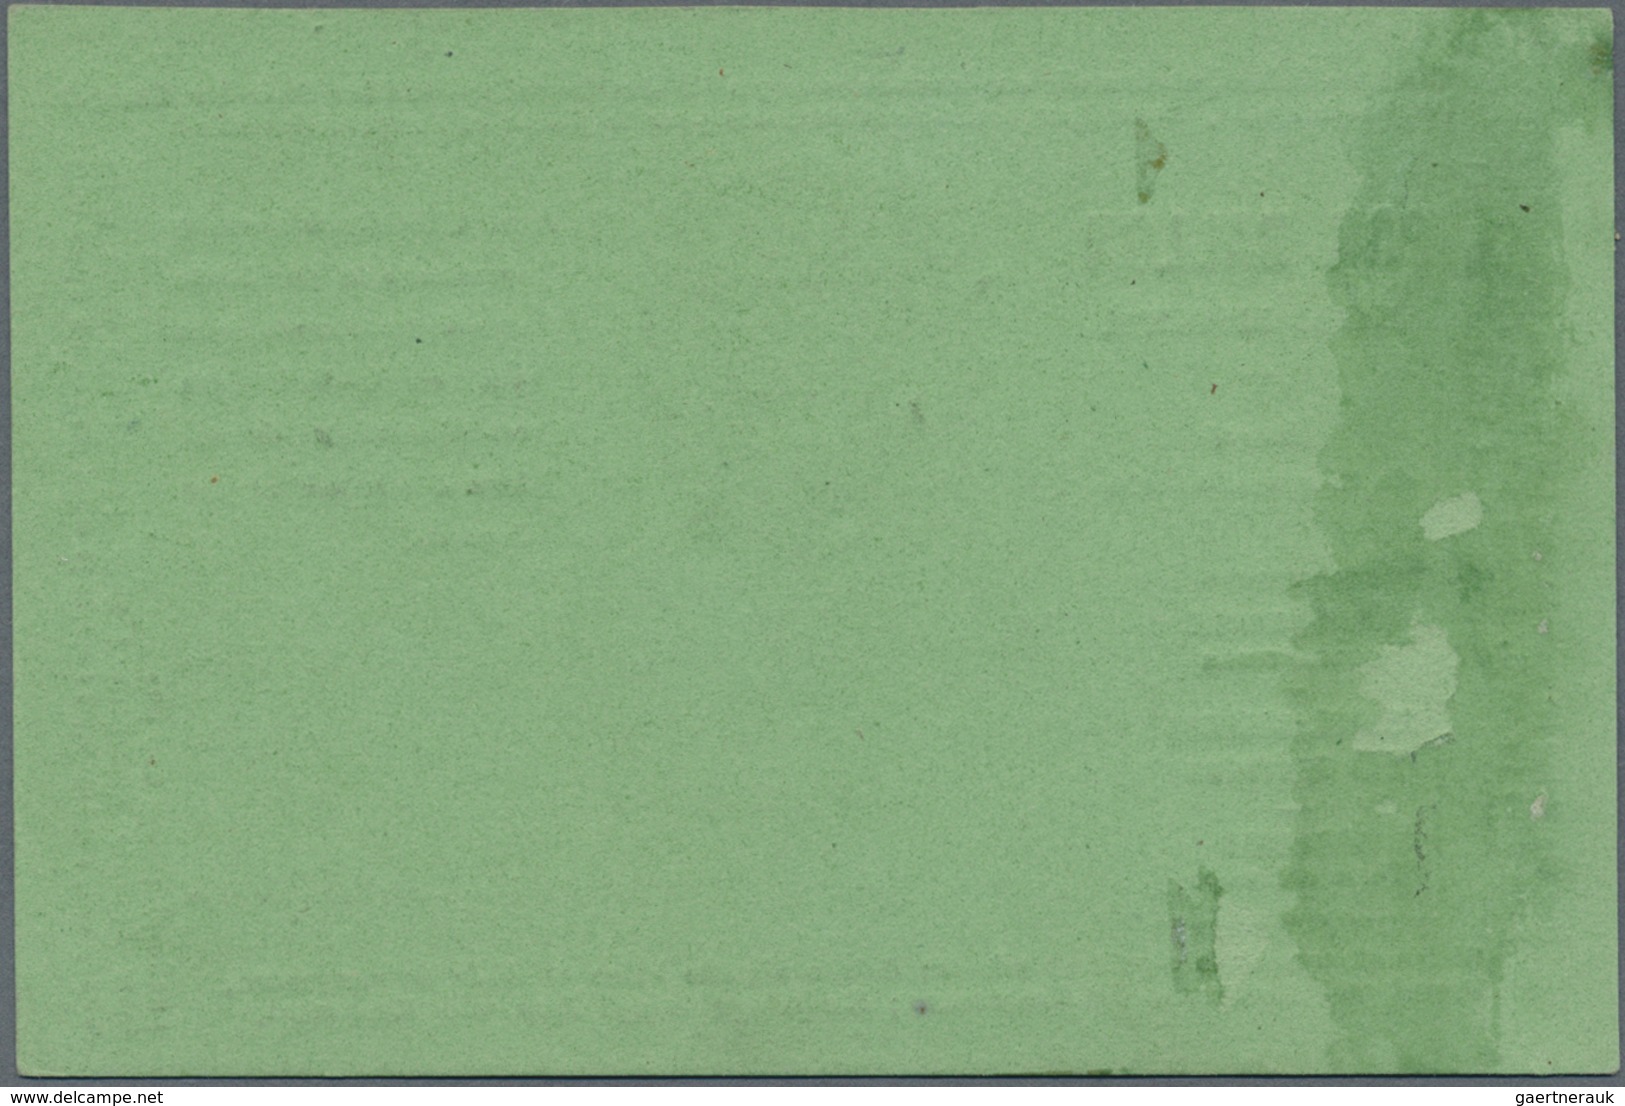 Br/GA Frankreich - Ballonpost: 1870, Postcard Form Black On Green "PAR BALLON NON MONTE" With Framed Place - 1960-.... Lettres & Documents